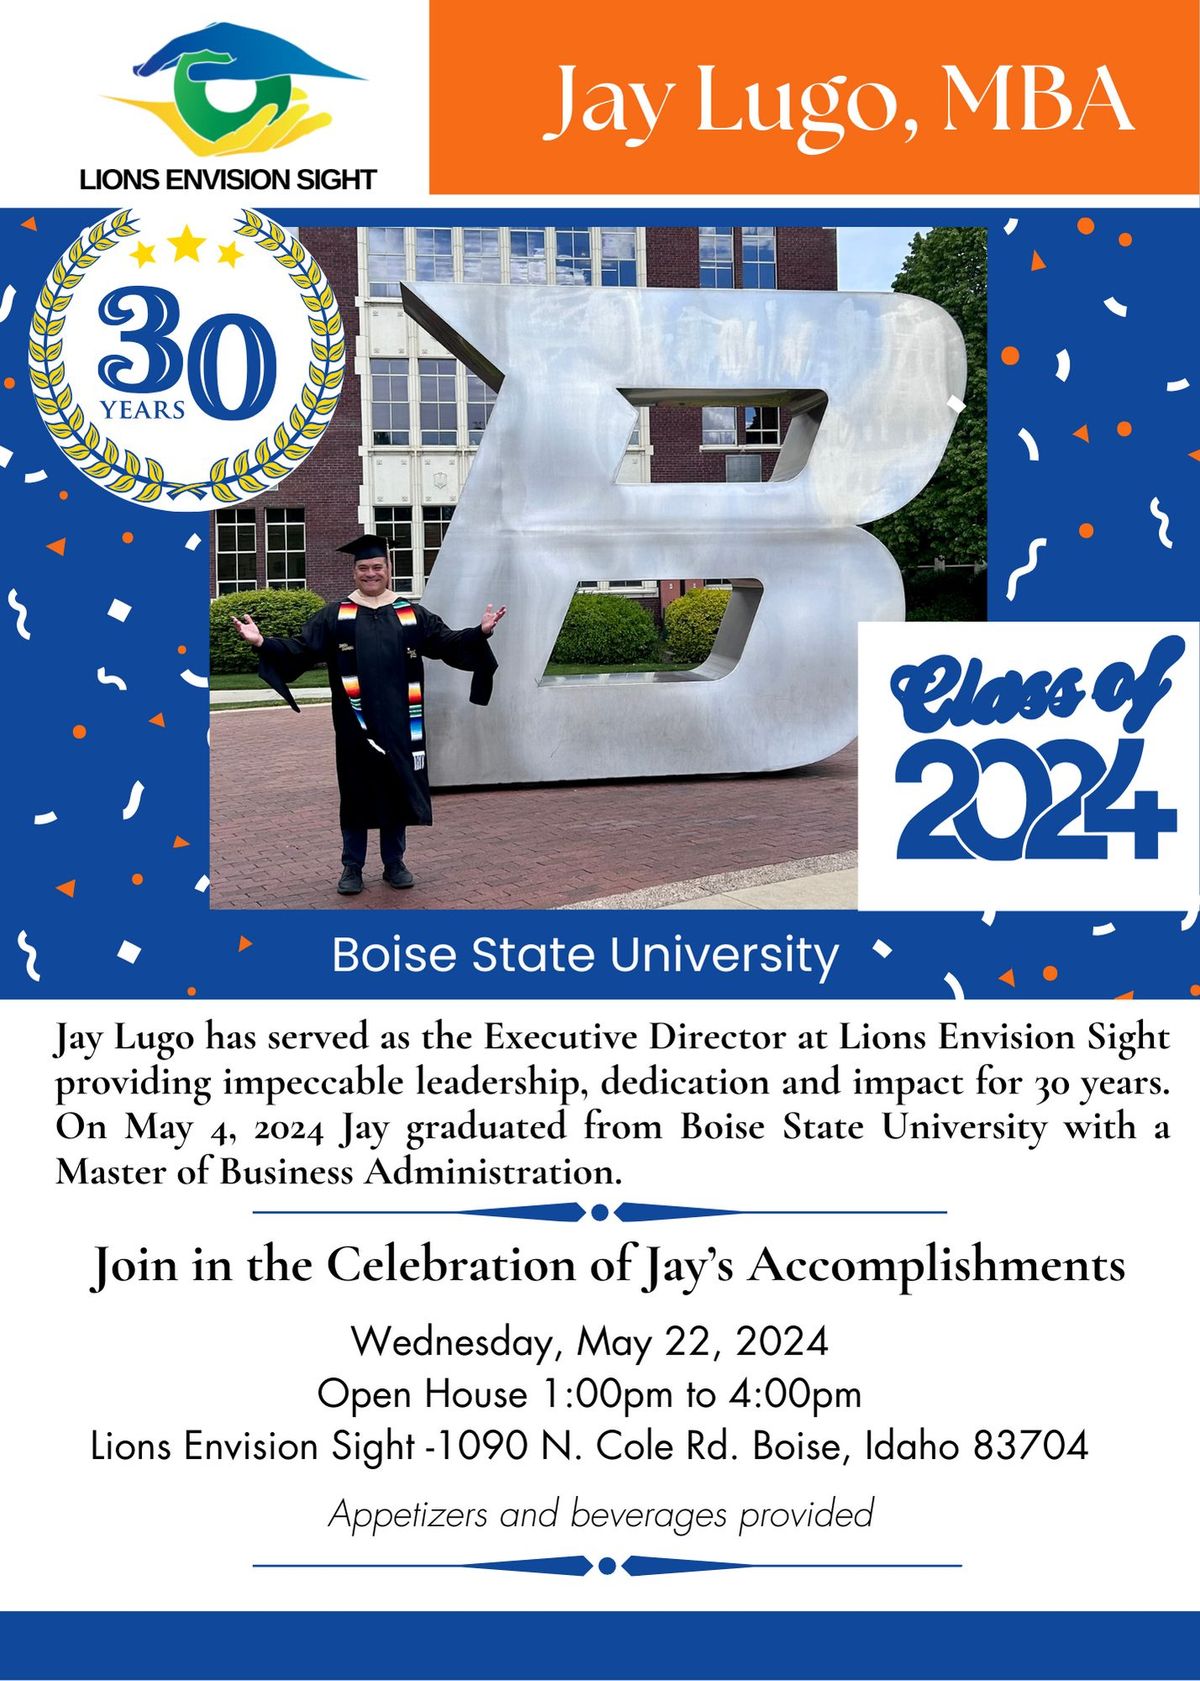 Jay Lugo's 30 Year Anniversary & MBA graduation 